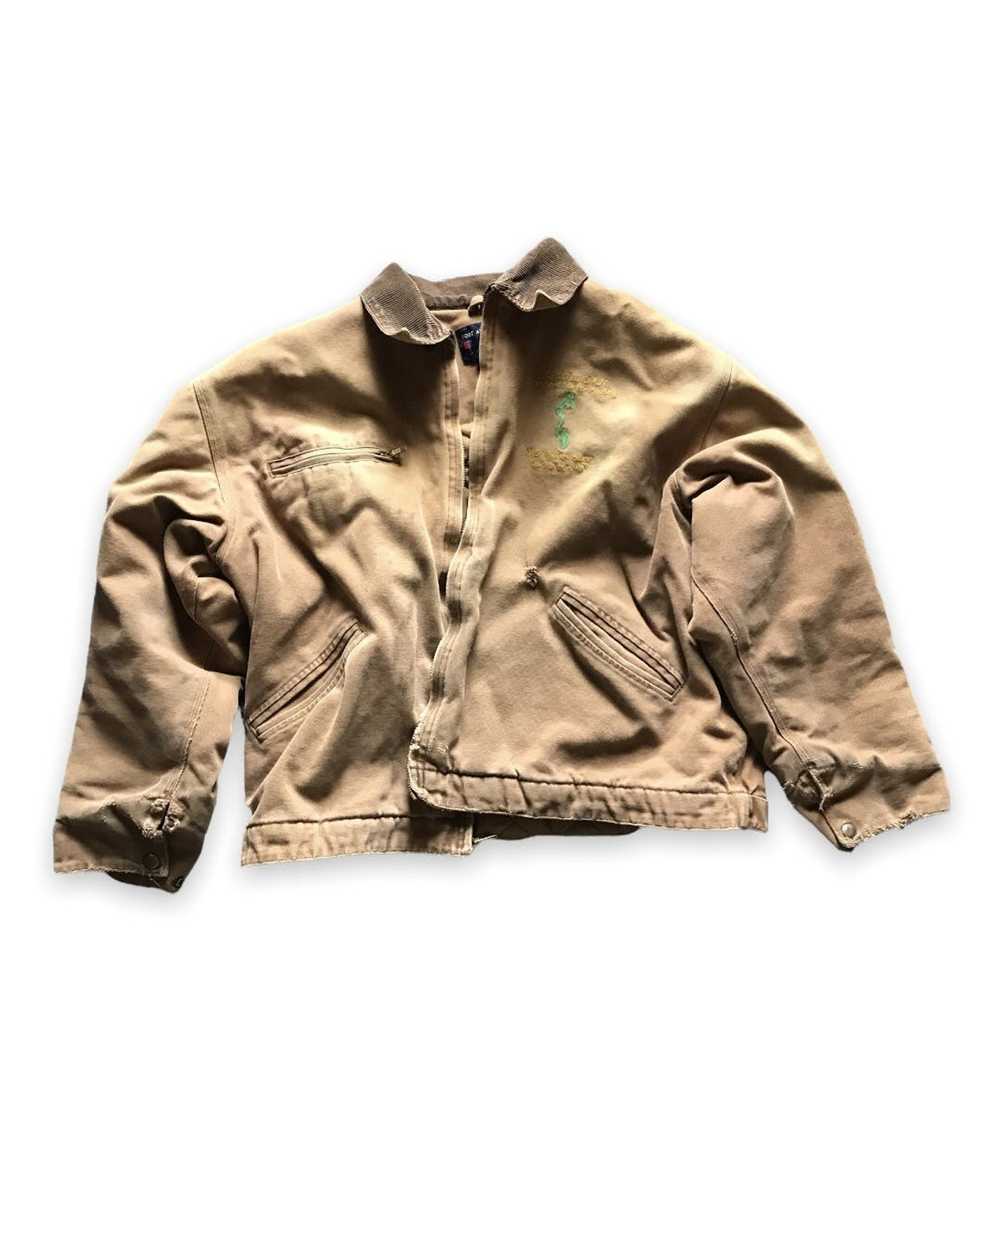 Vintage port authority jacket - Gem